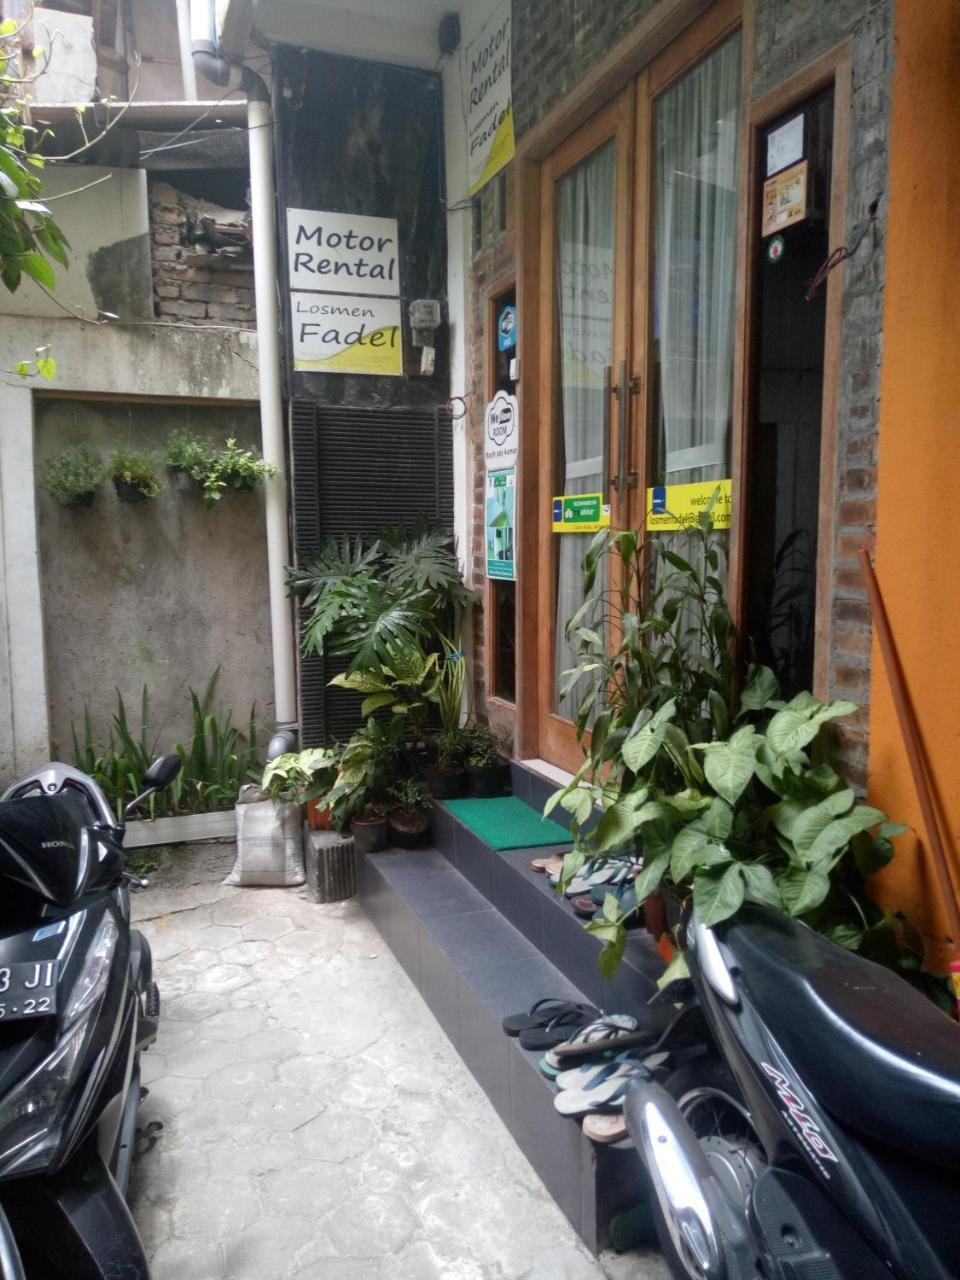 Losmen Fadel Malioboro Jogja Yogyakarta Exterior photo